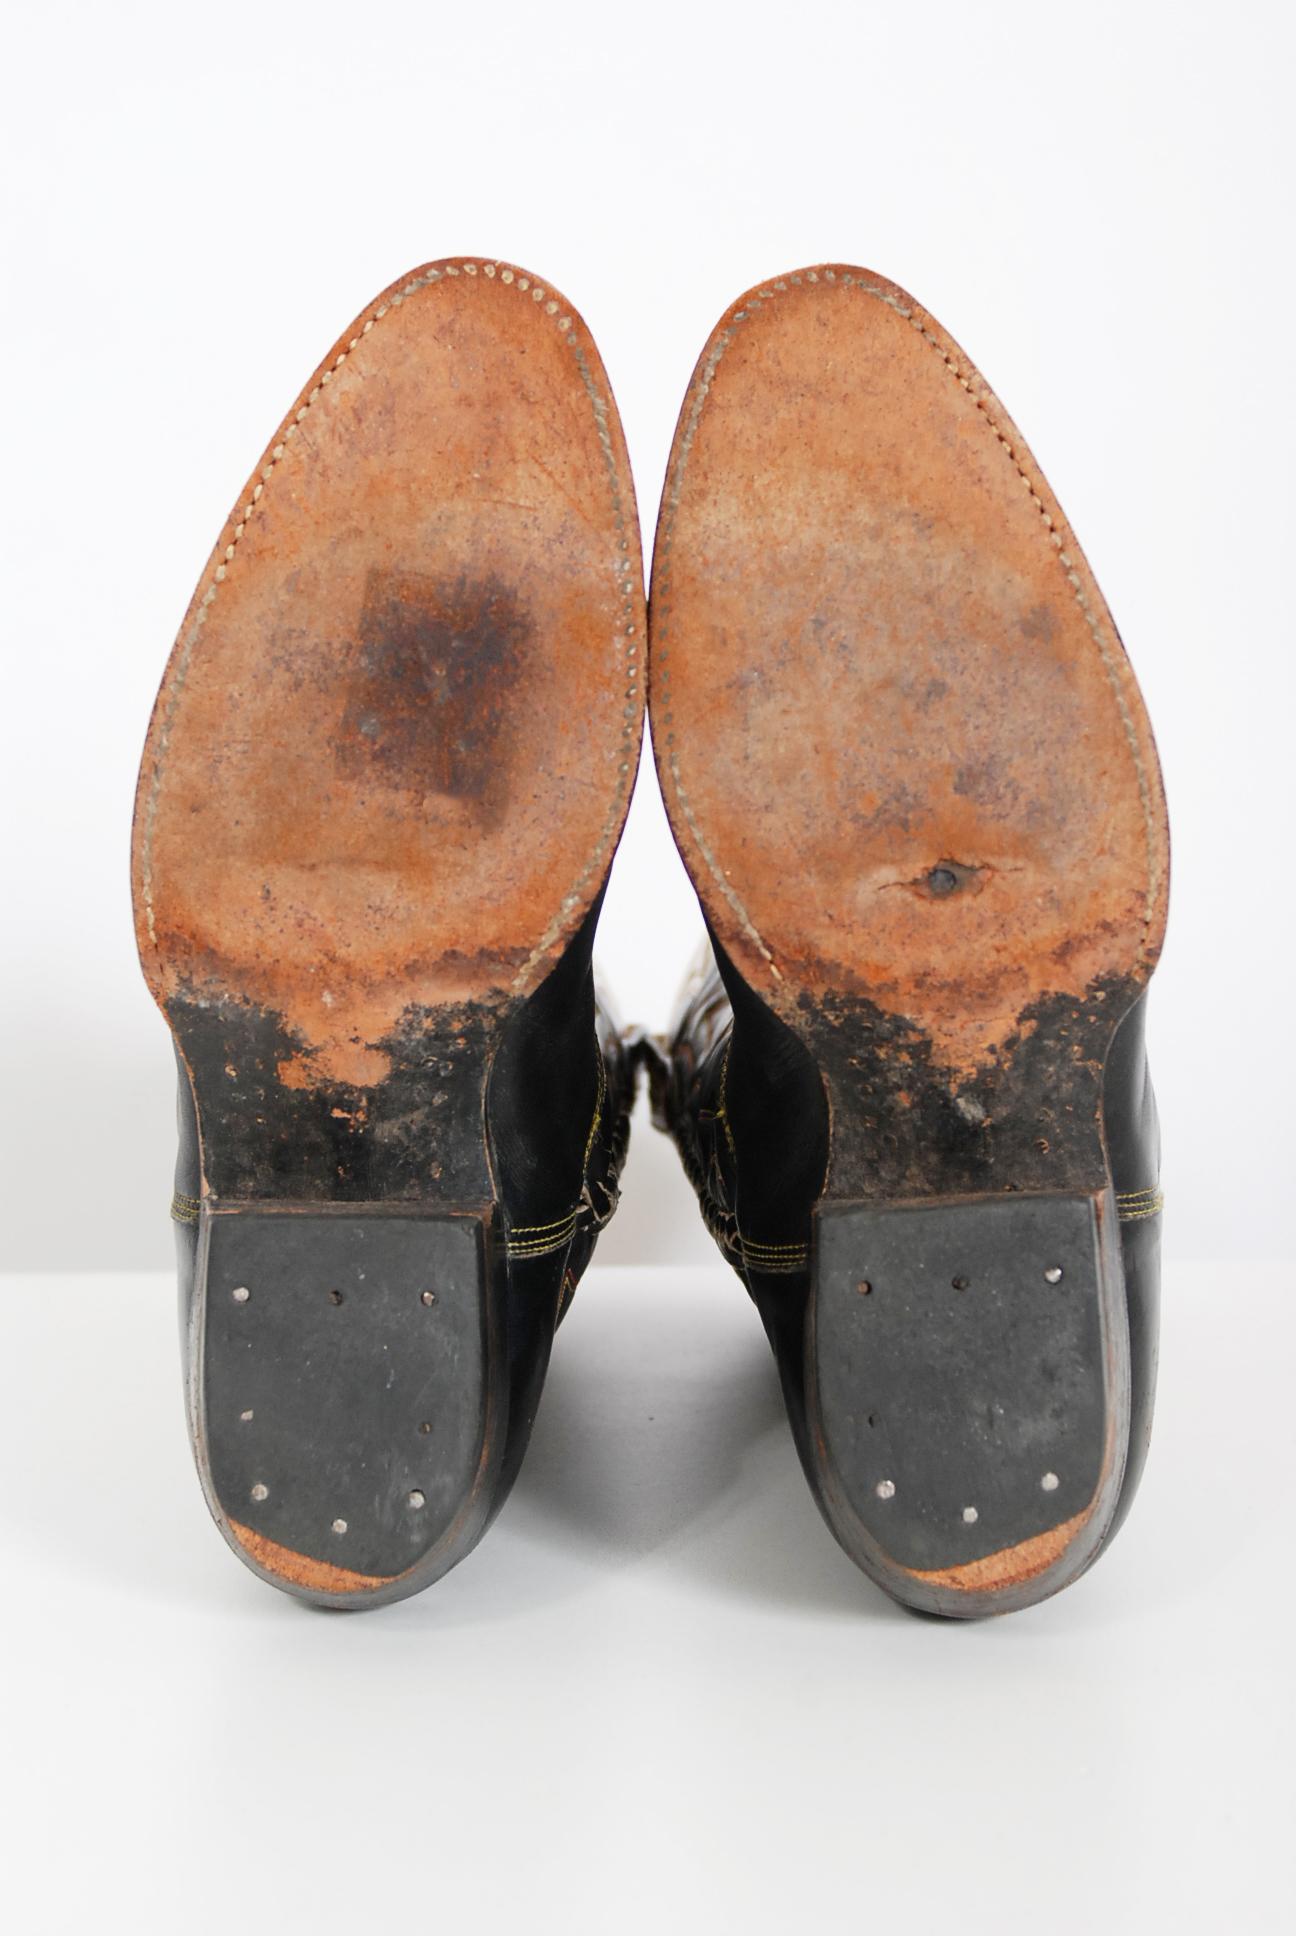 Vintage 1970's Don Quijote Novelty Horseshoe Black Leather Western Cowboy Boots 2